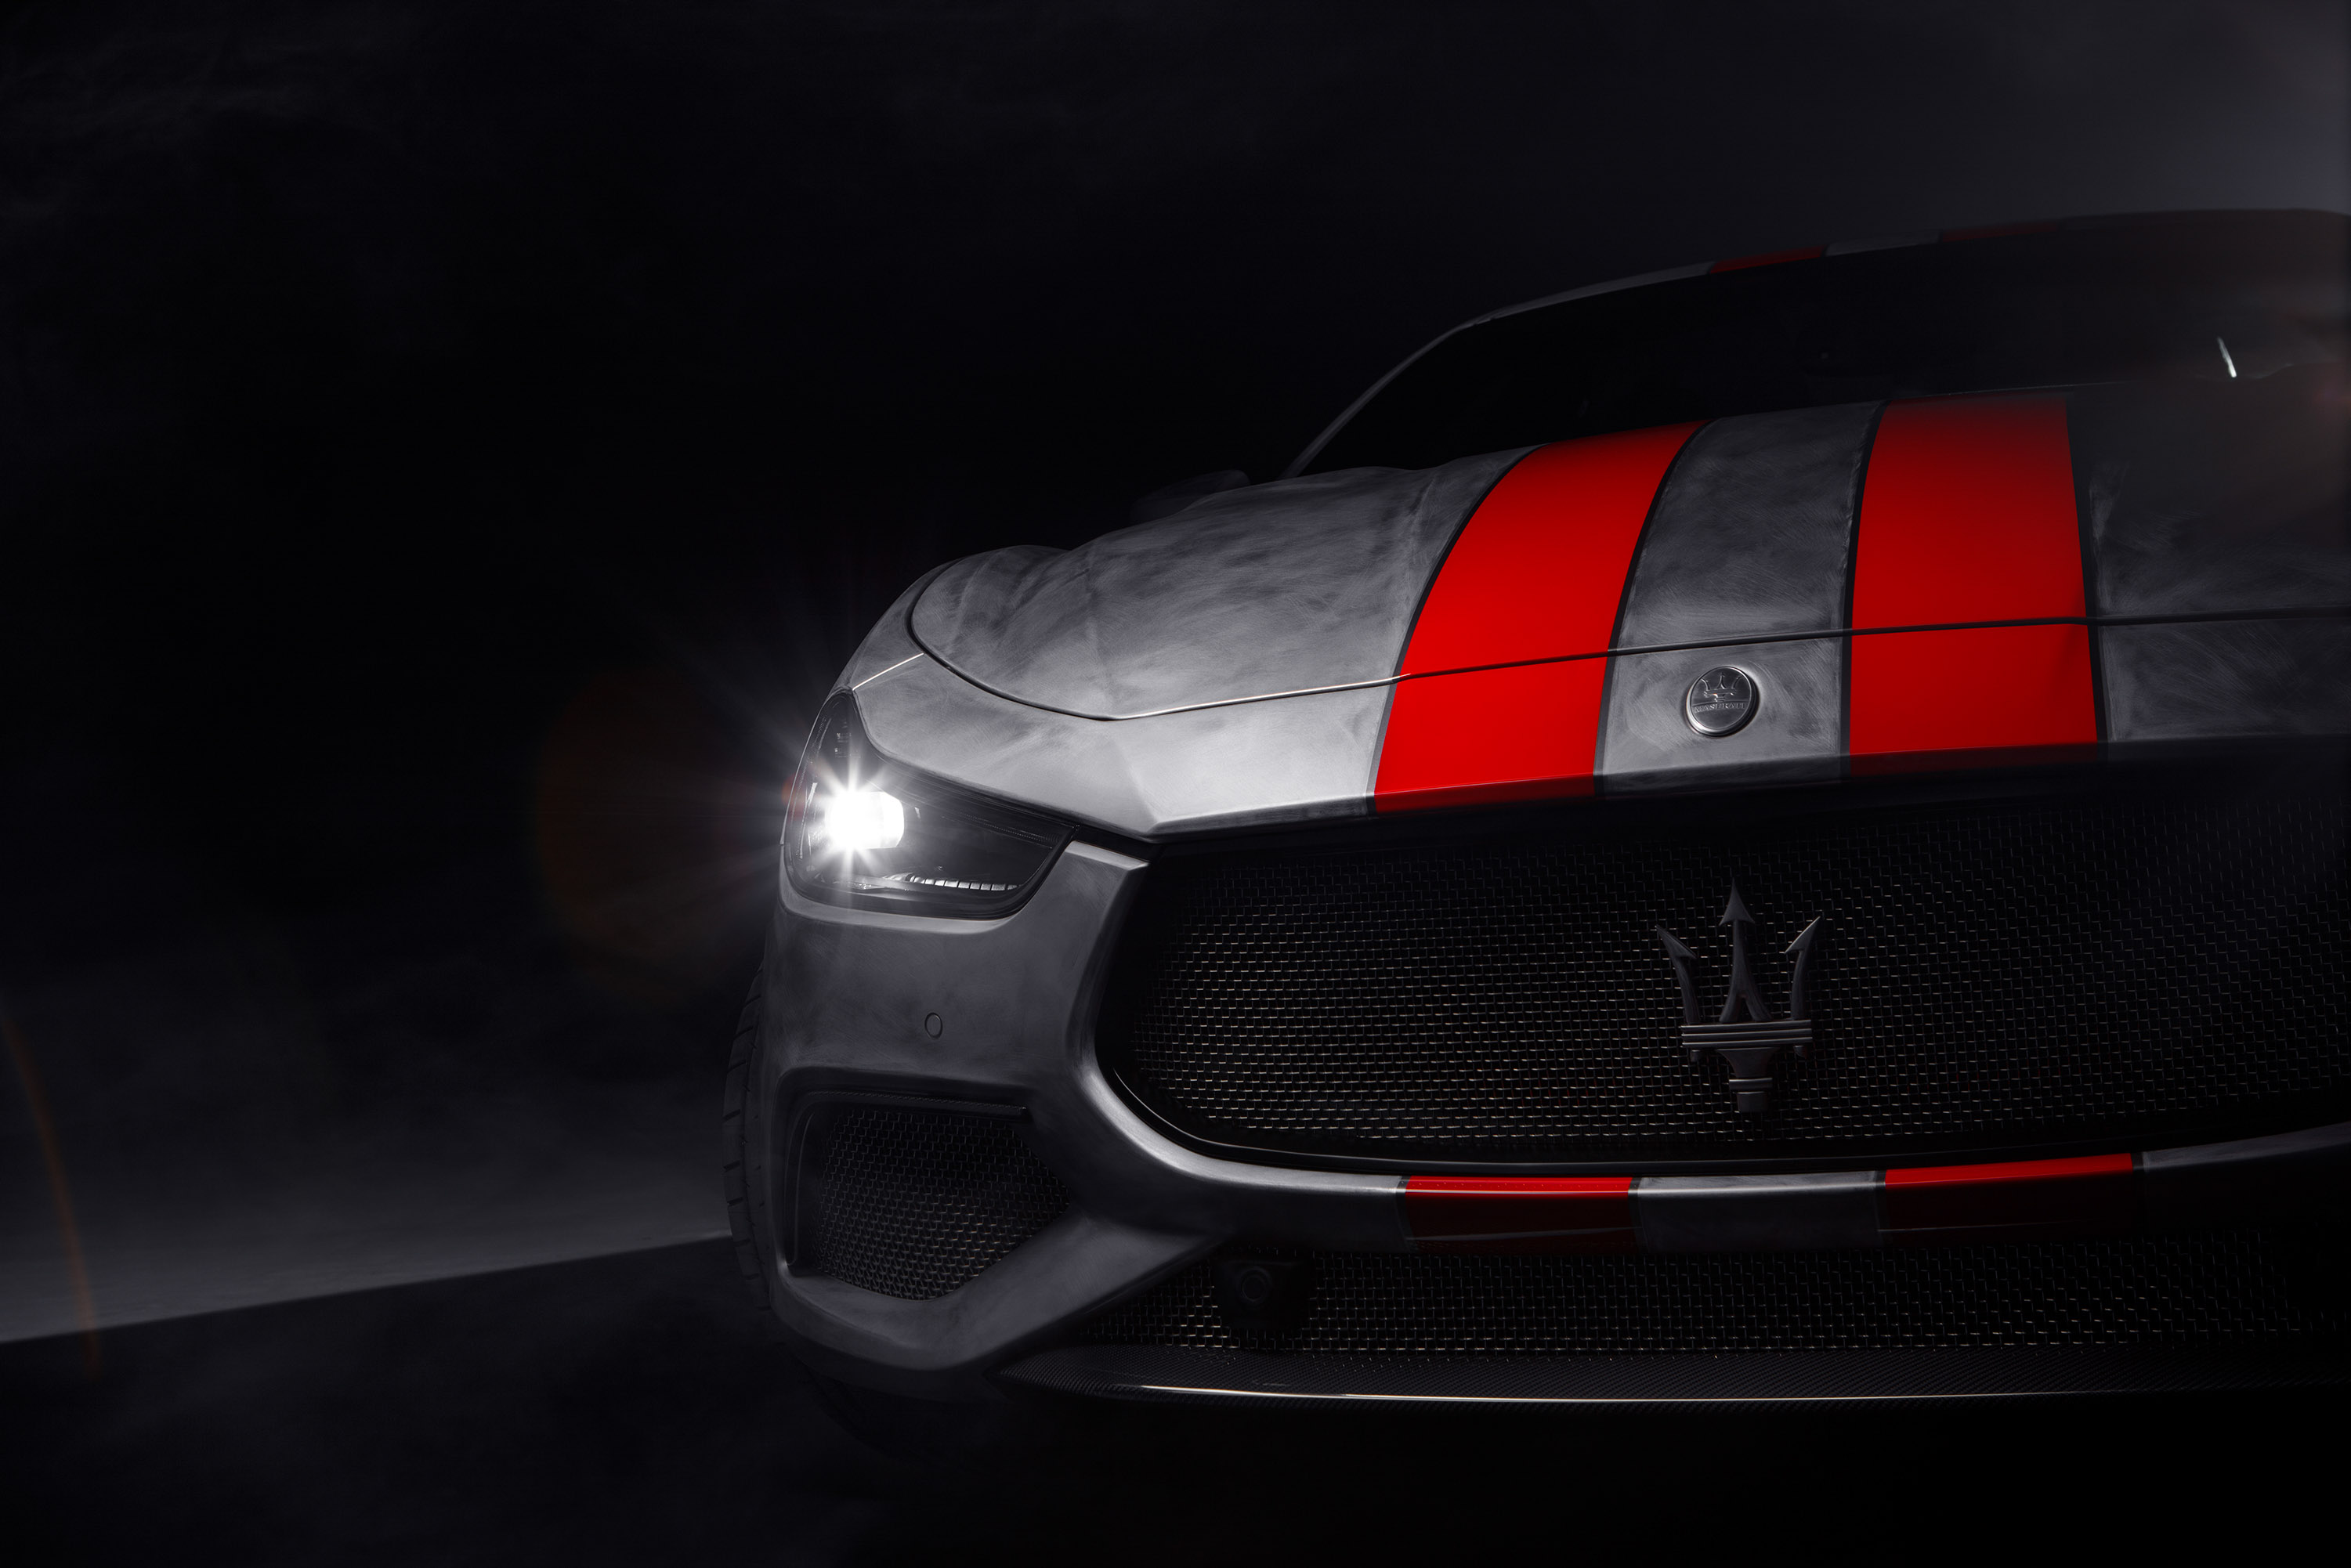 https://s3.paultan.org/image/2020/09/Maserati-Ghibli-Fuoriserie-Corse-7.jpg